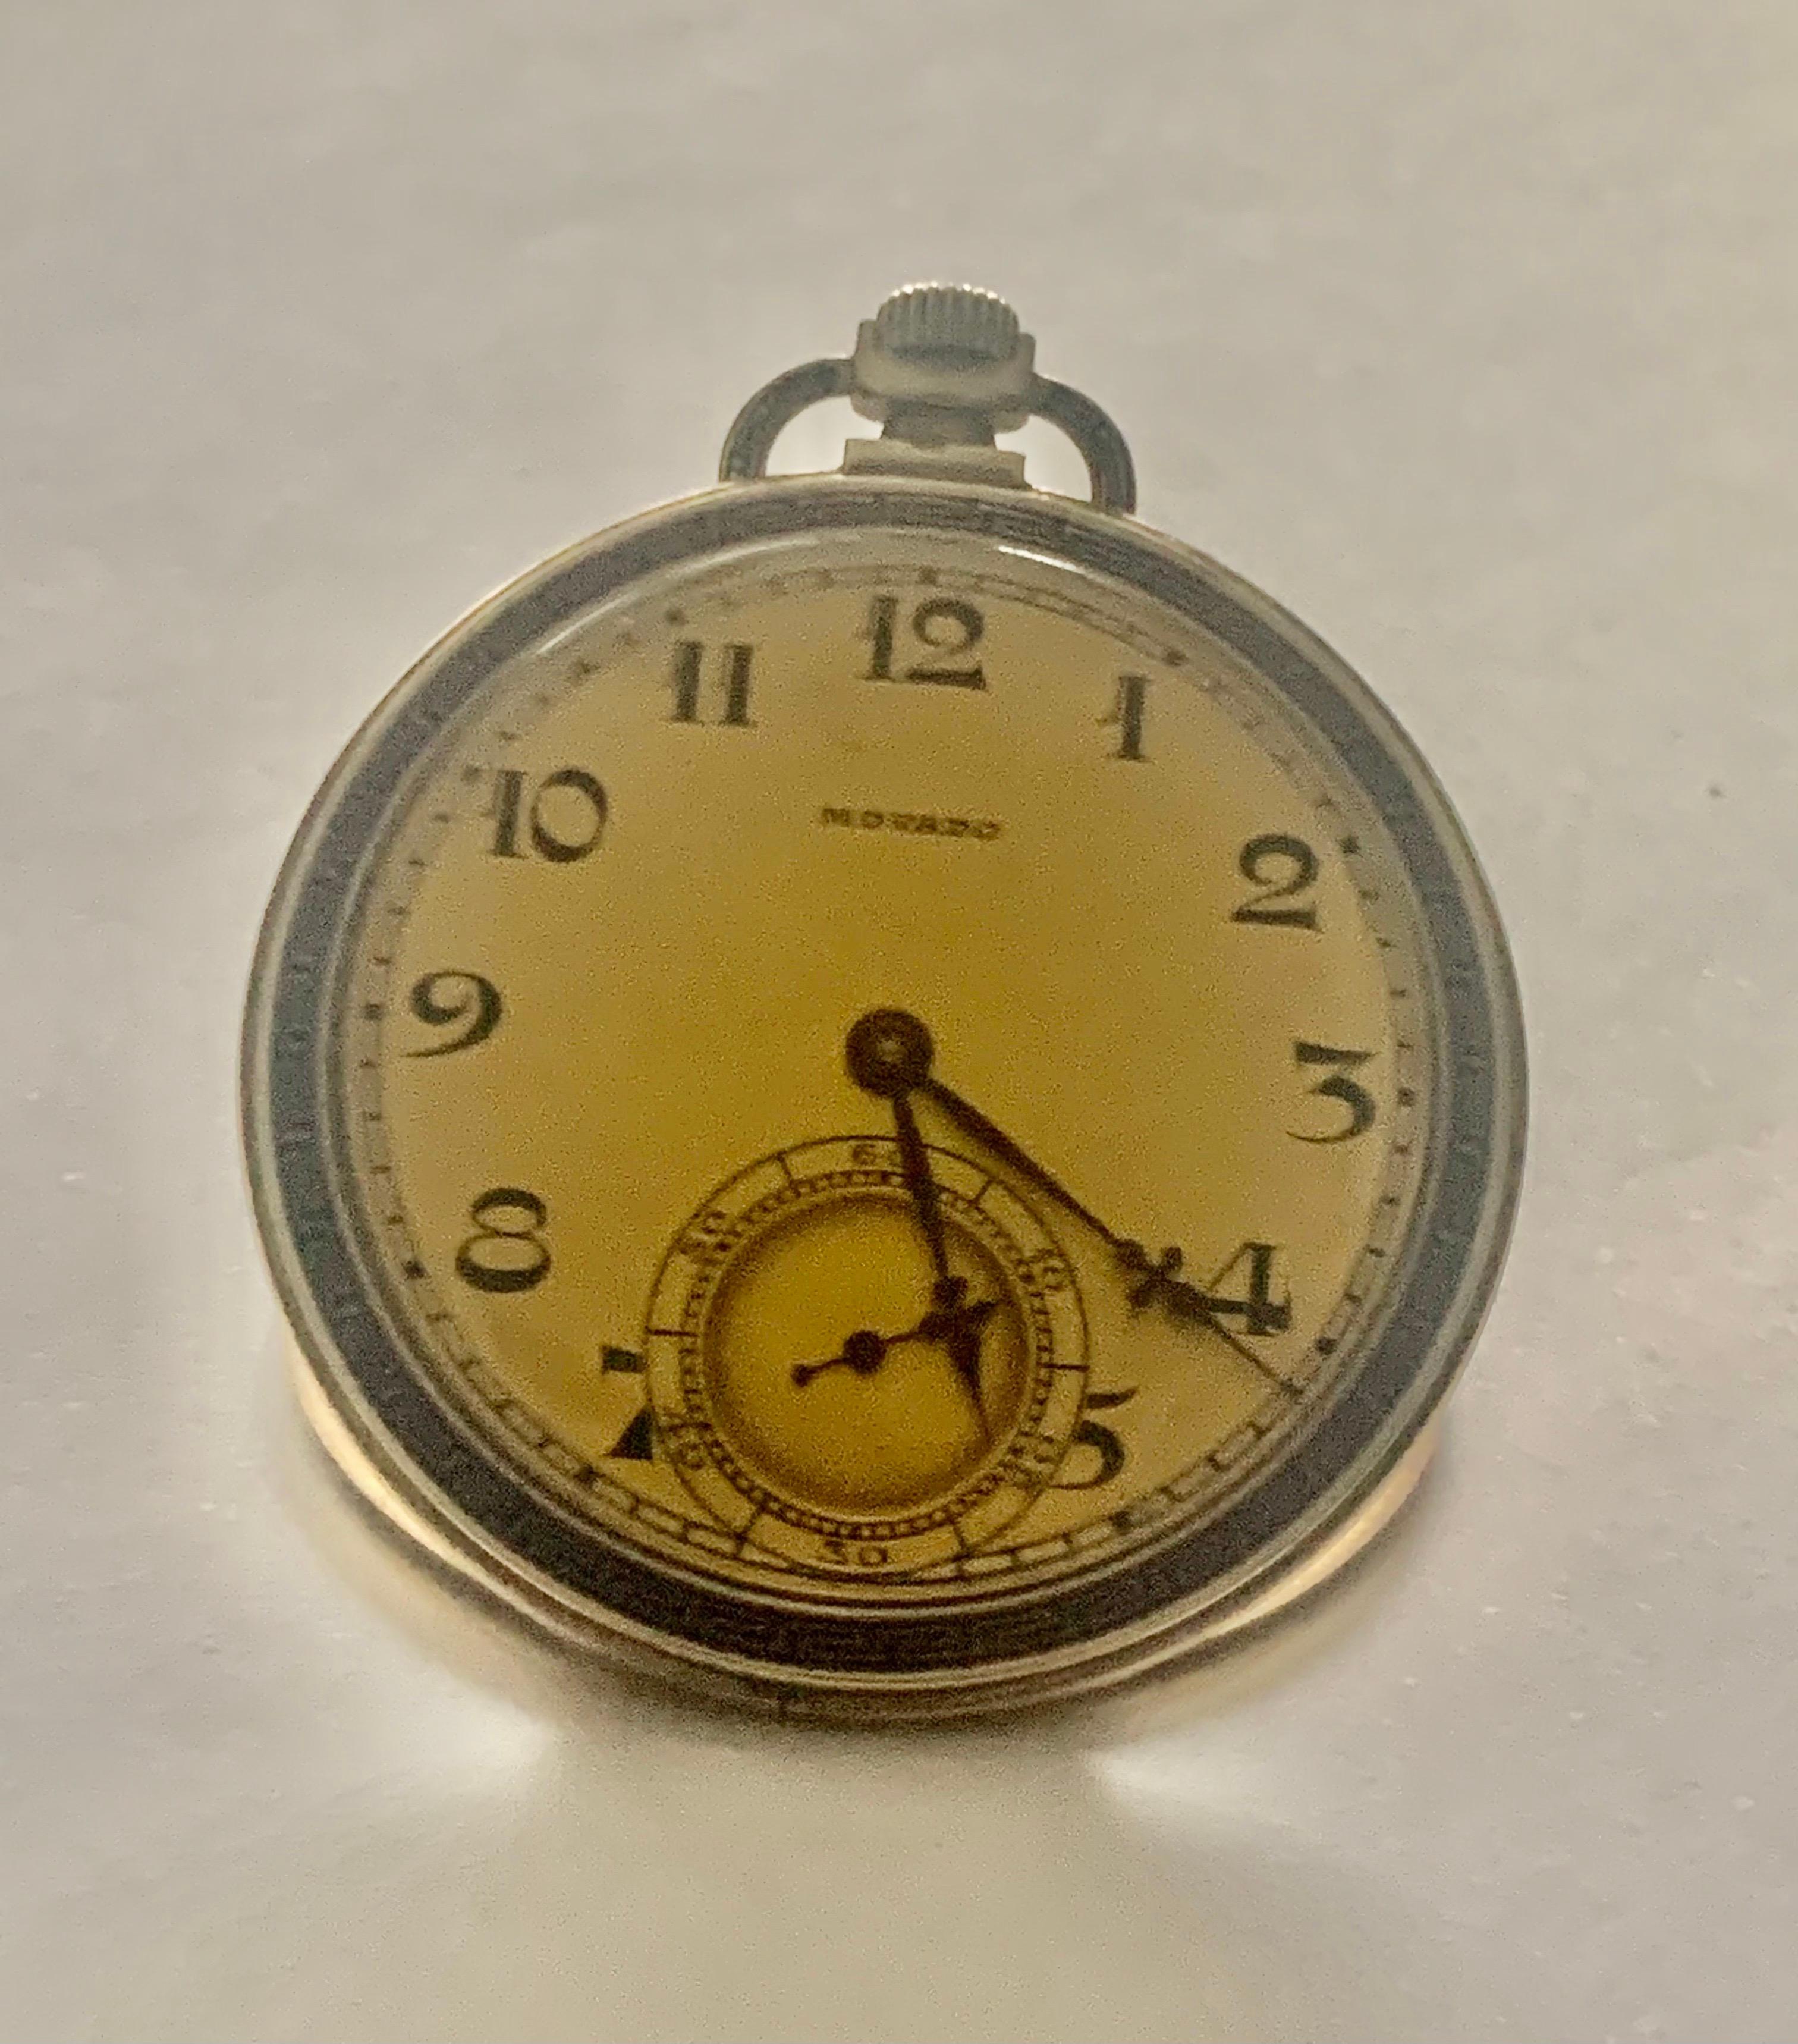 Superb 14k Yellow Gold & Enamel Art Deco Pocket Watch by Movado 2